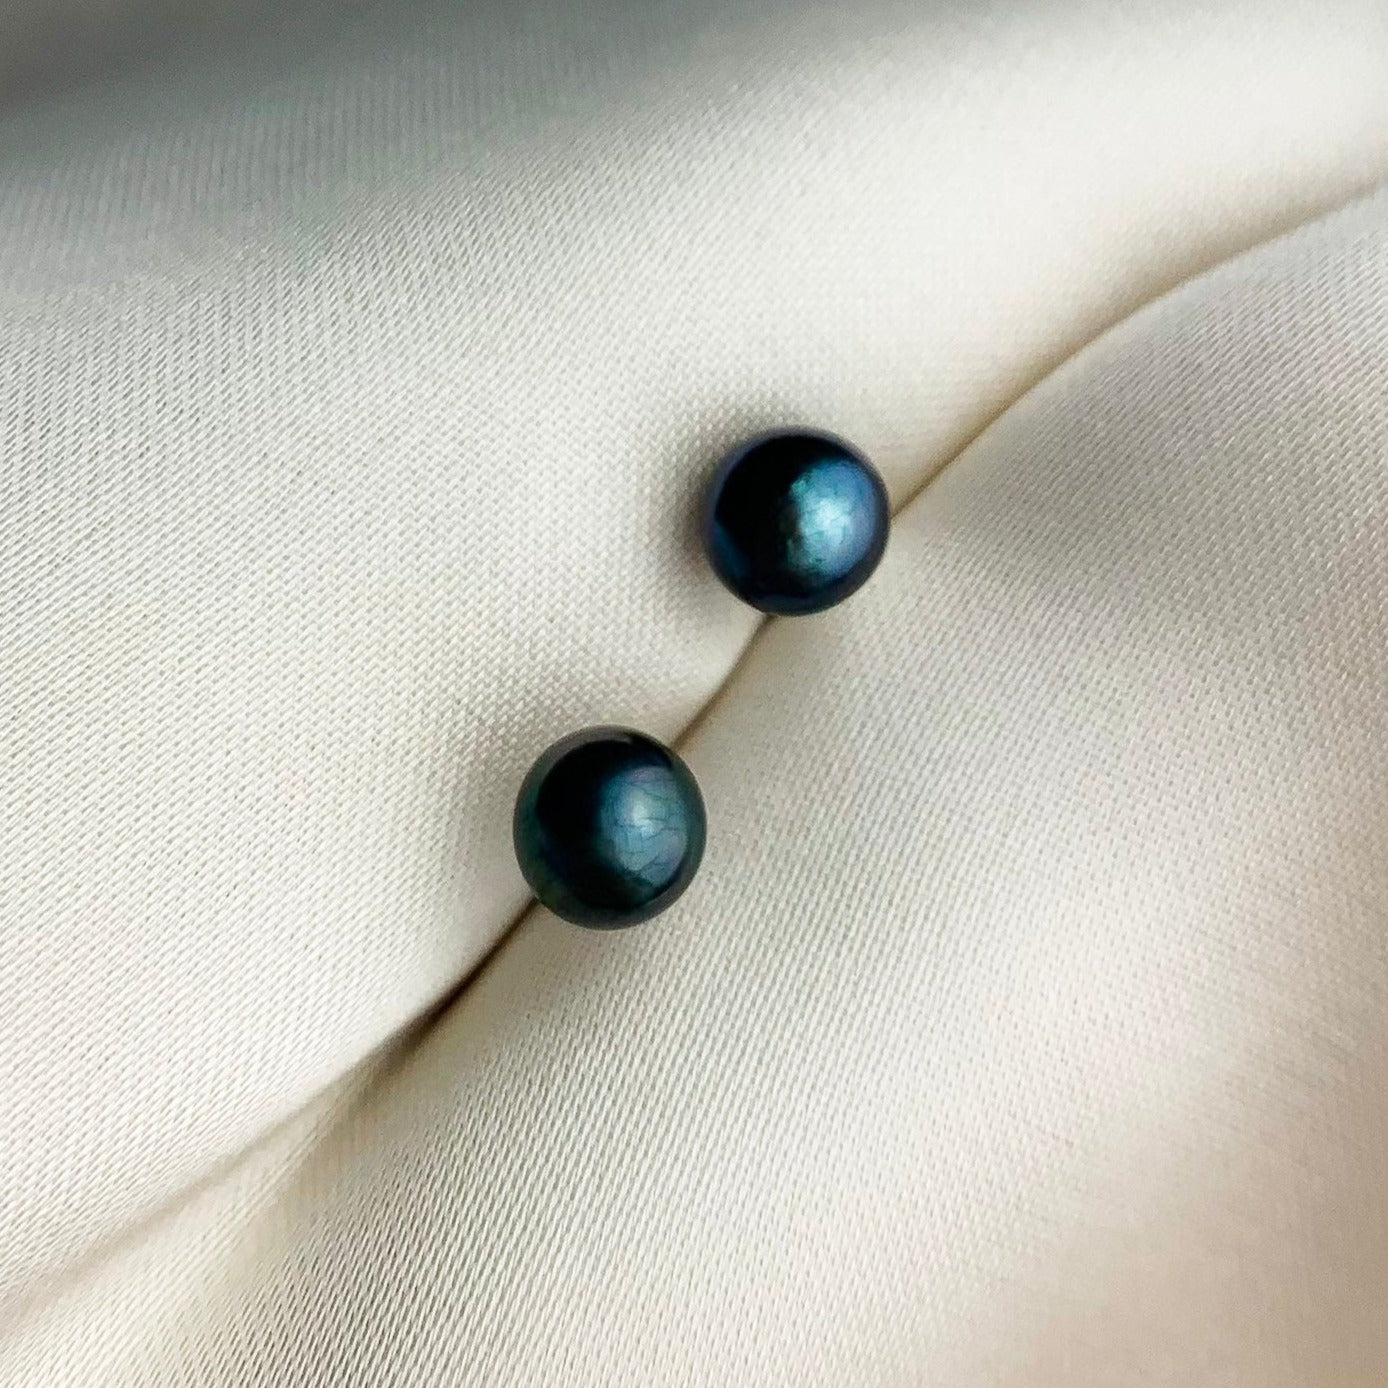 Blue Pearl Stud Earrings